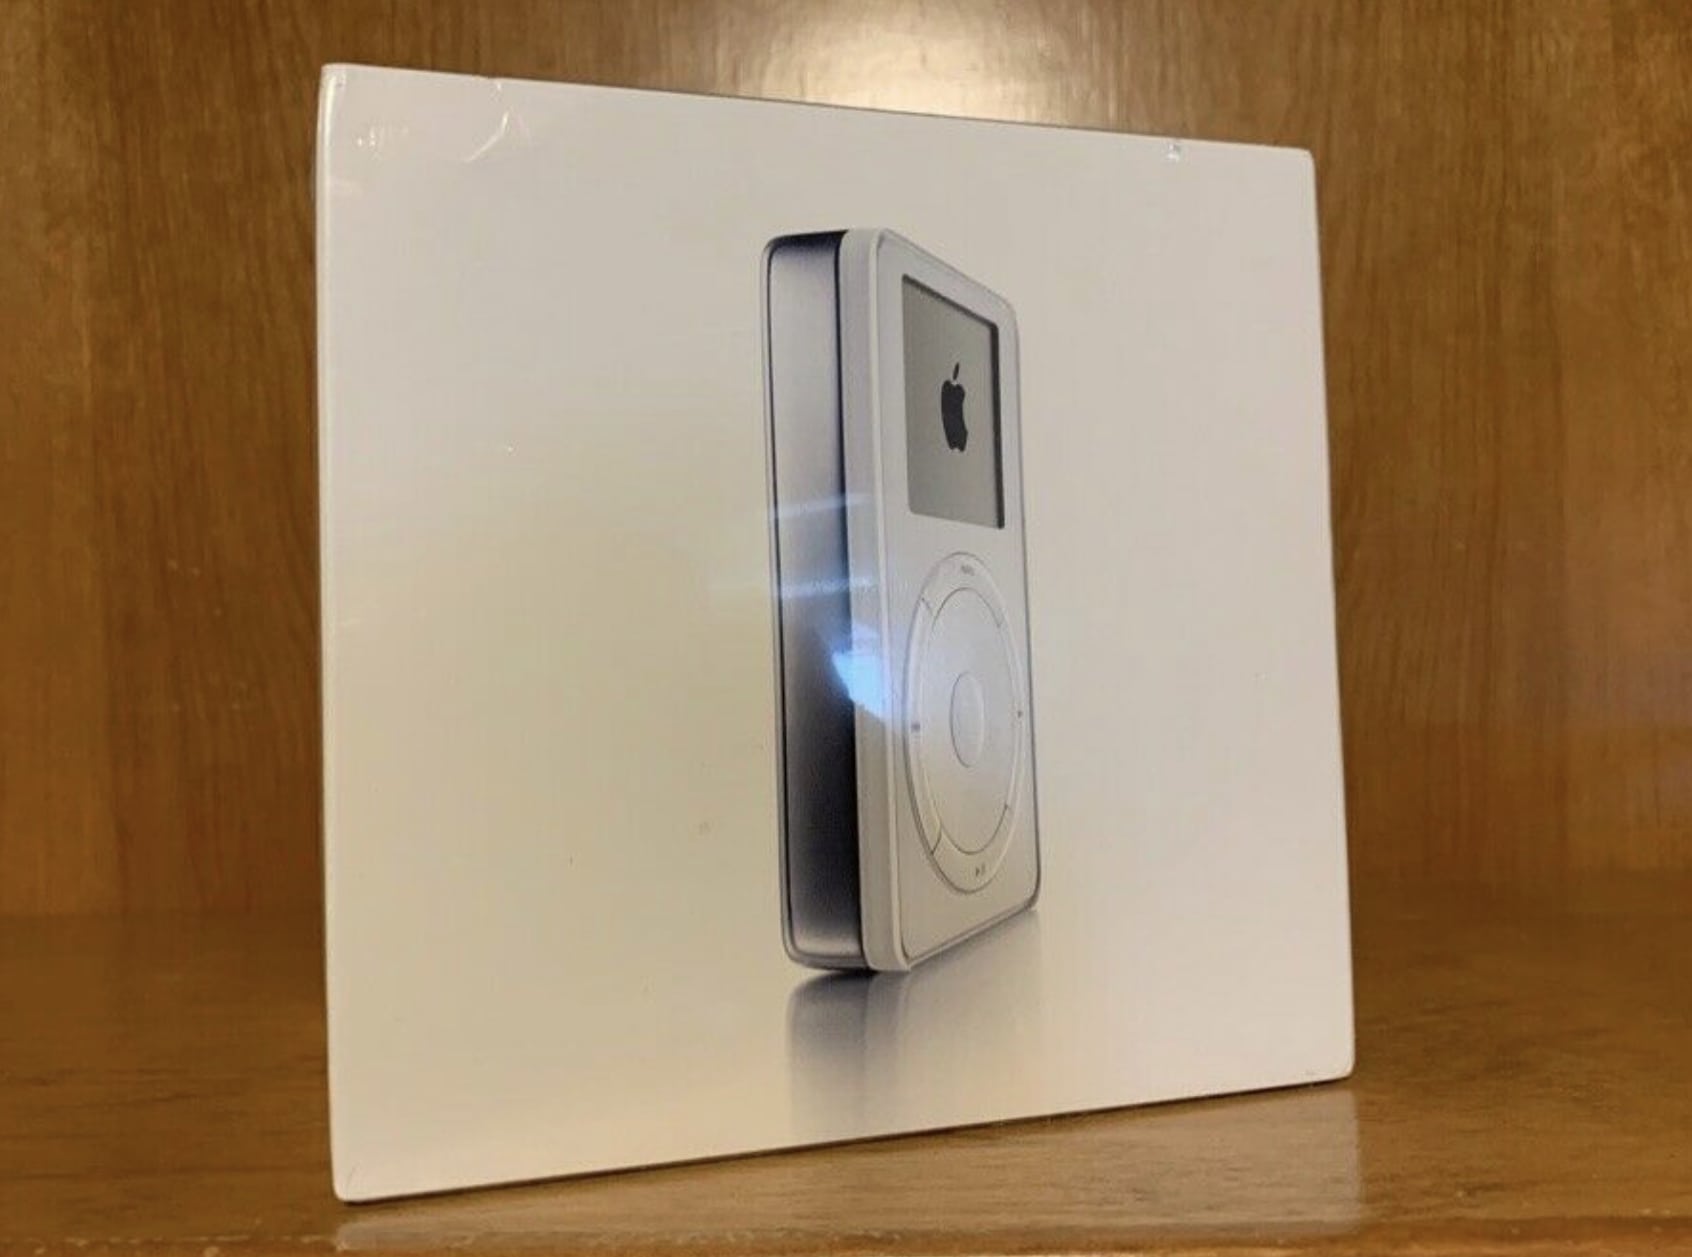 Original iPod in sealed packaging